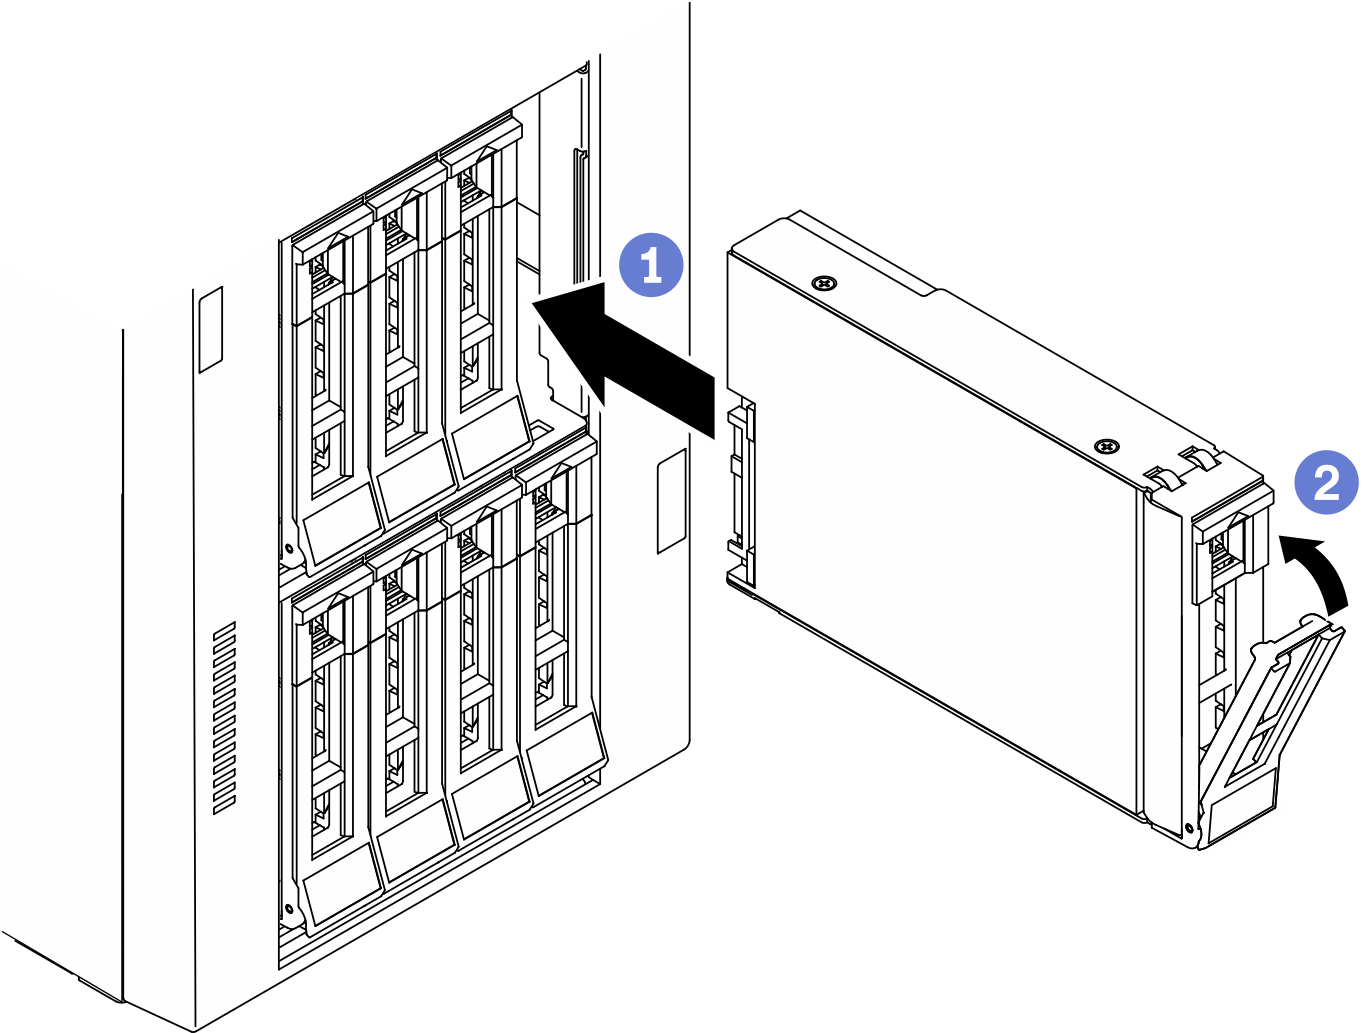 Hot-swap drive installation